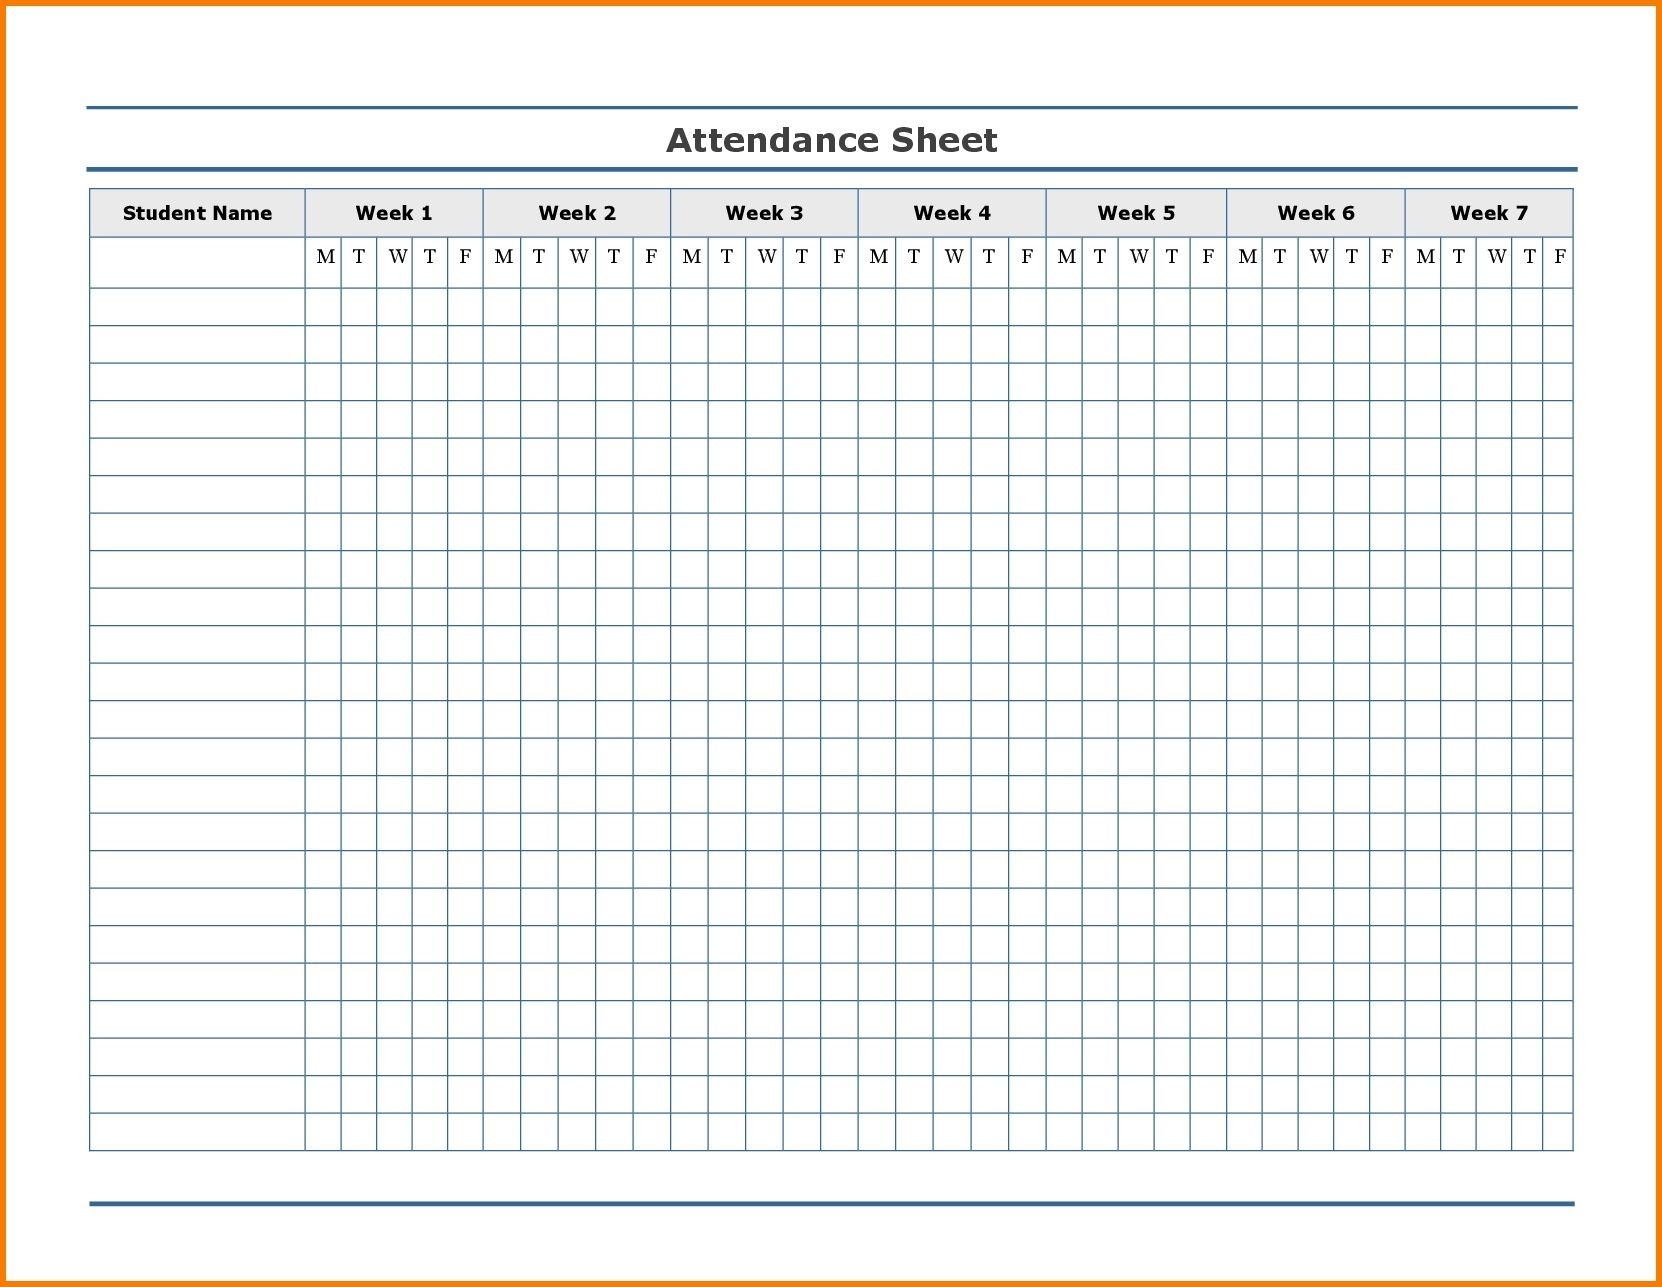 Free Employee Attendance Calendar | Employee Tracker-Free Monthly 2020 Attendance Template